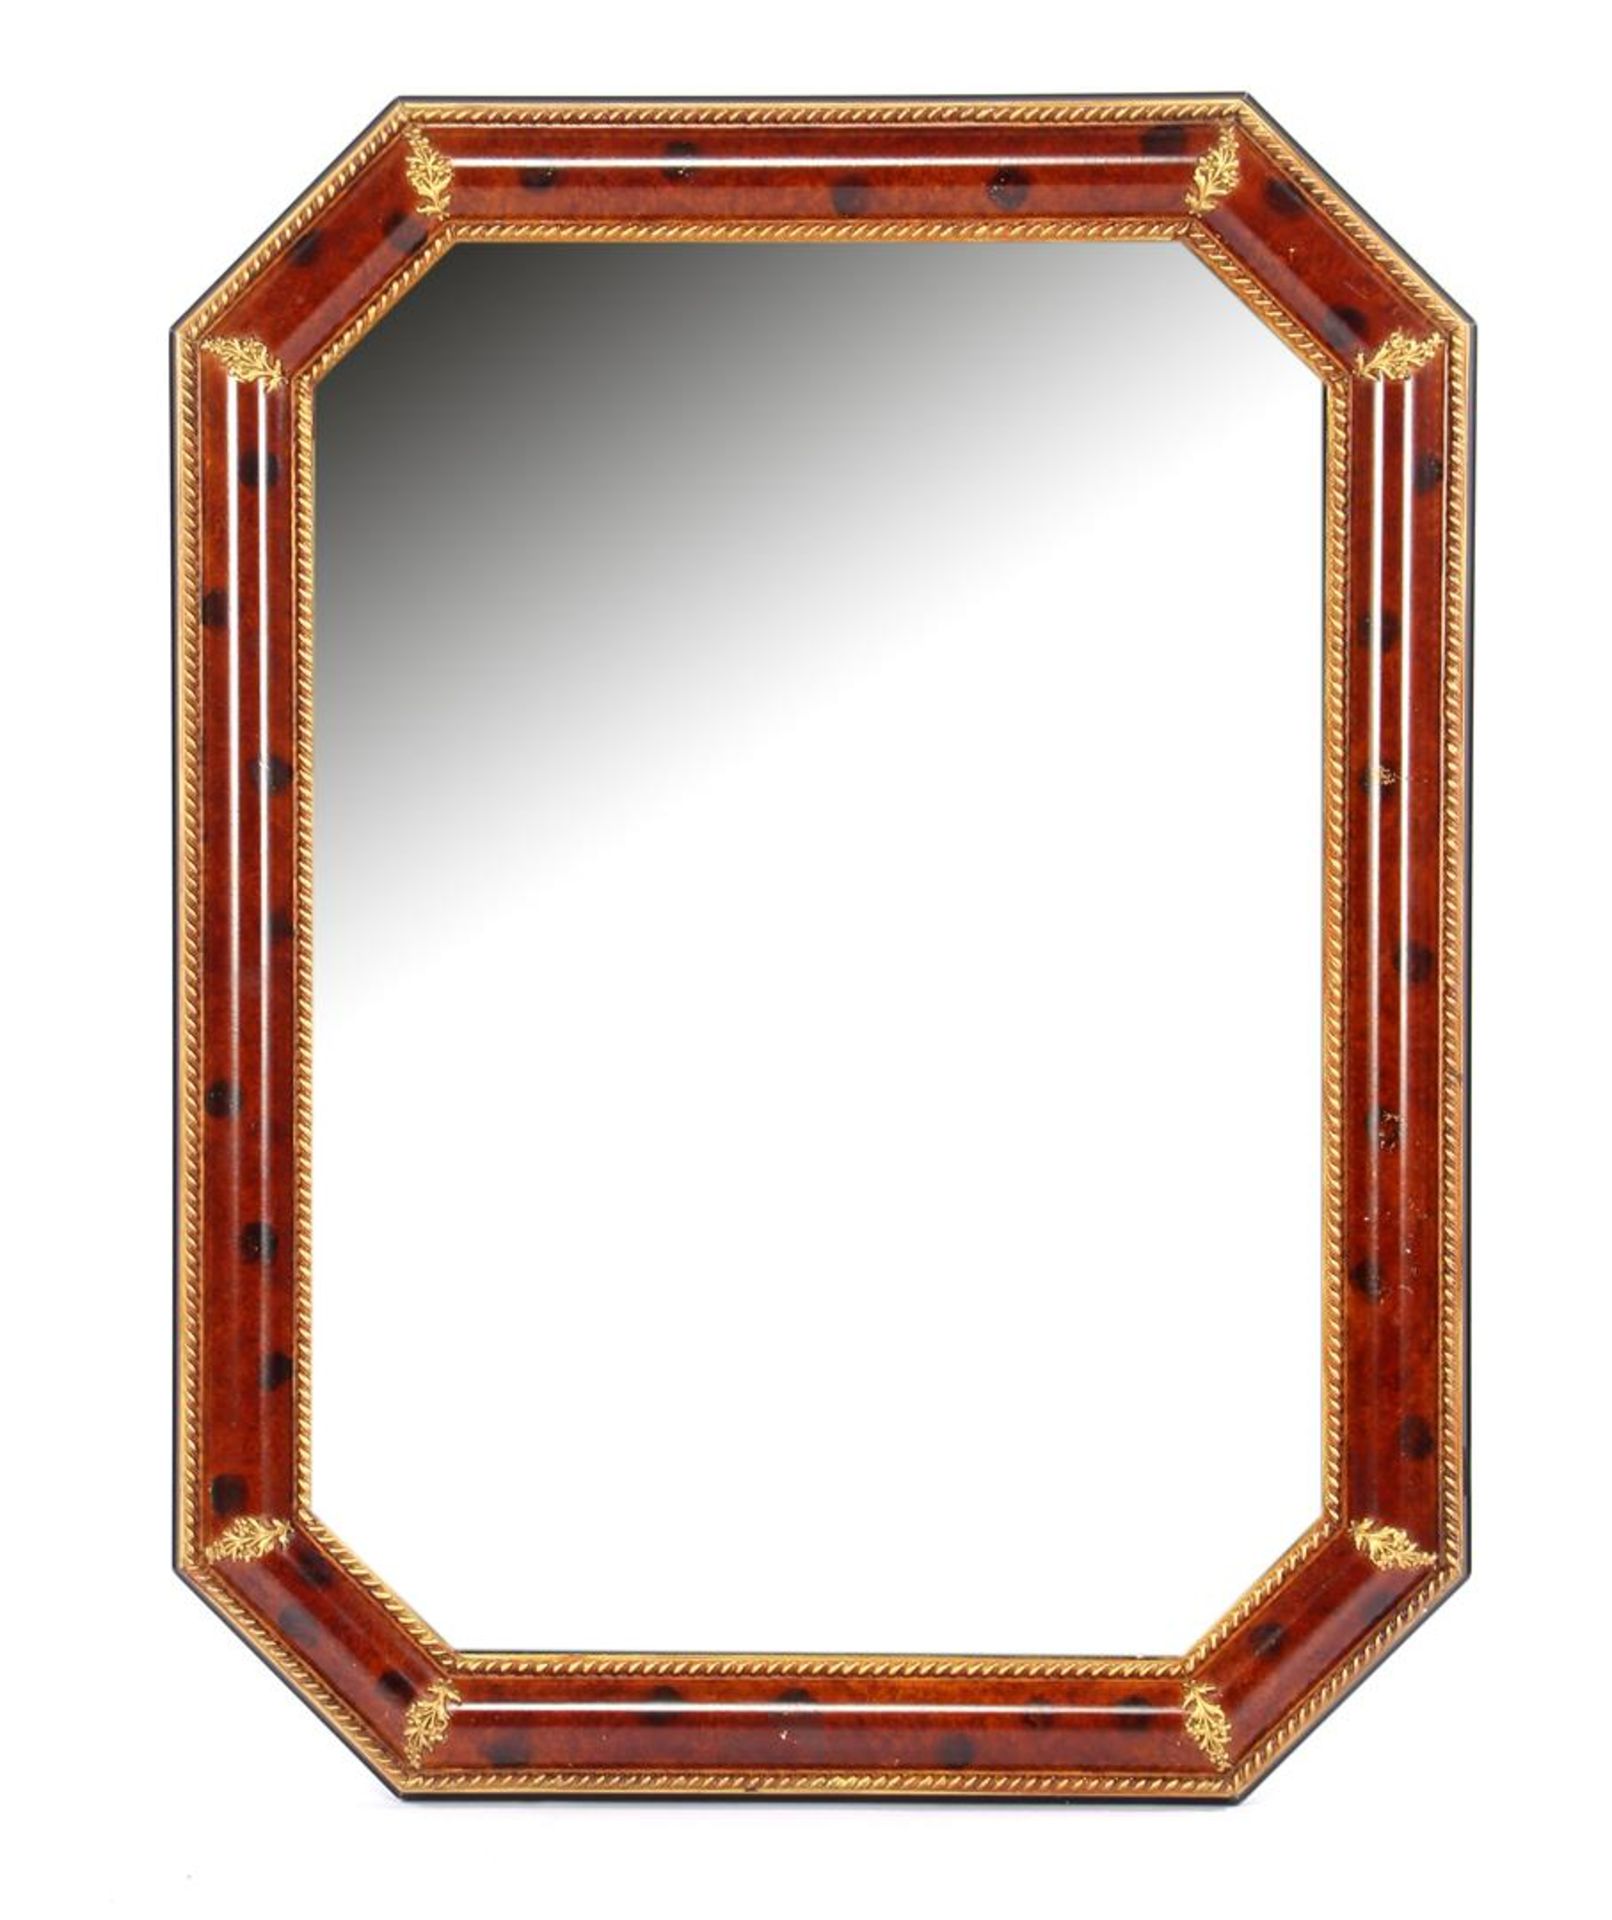 Facet cut mirror in a classic frame with burr walnut decor, 85x65 cm